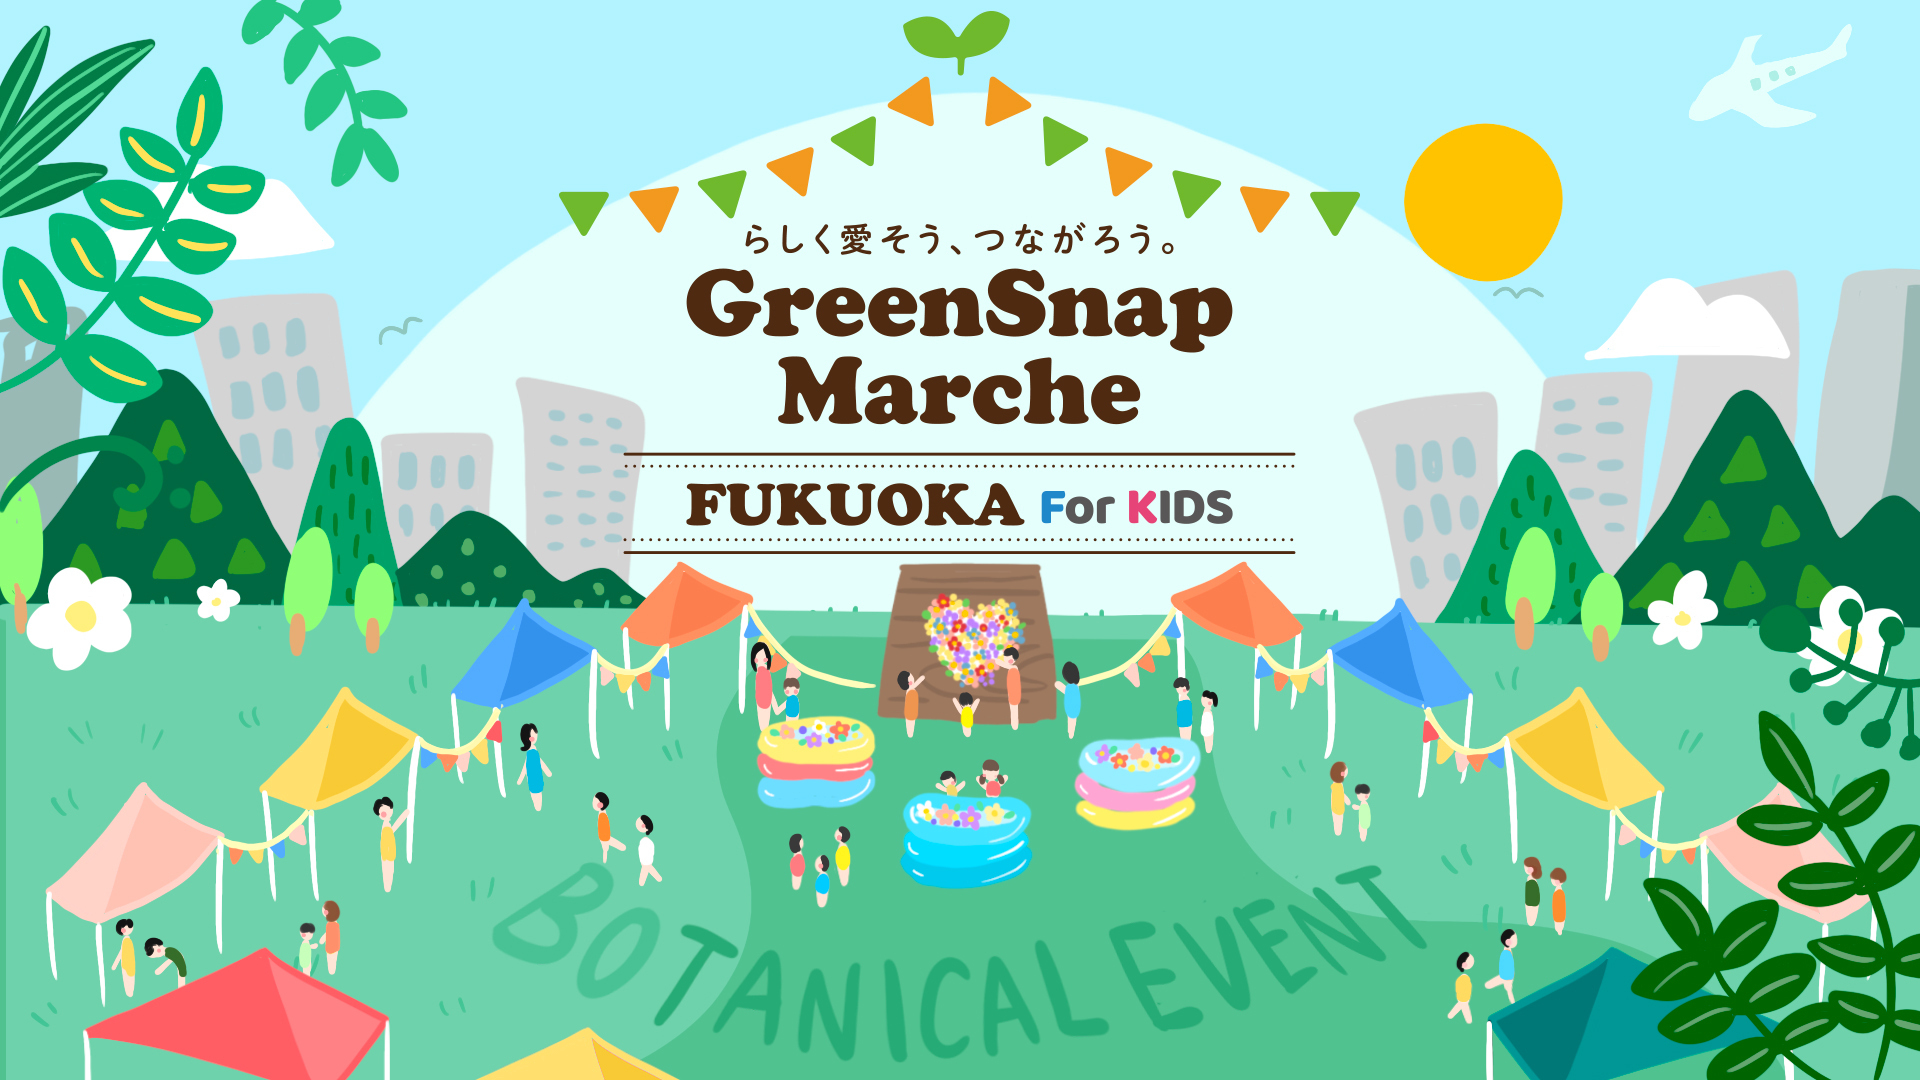 GreenSnap Marche Fukuoka for kids